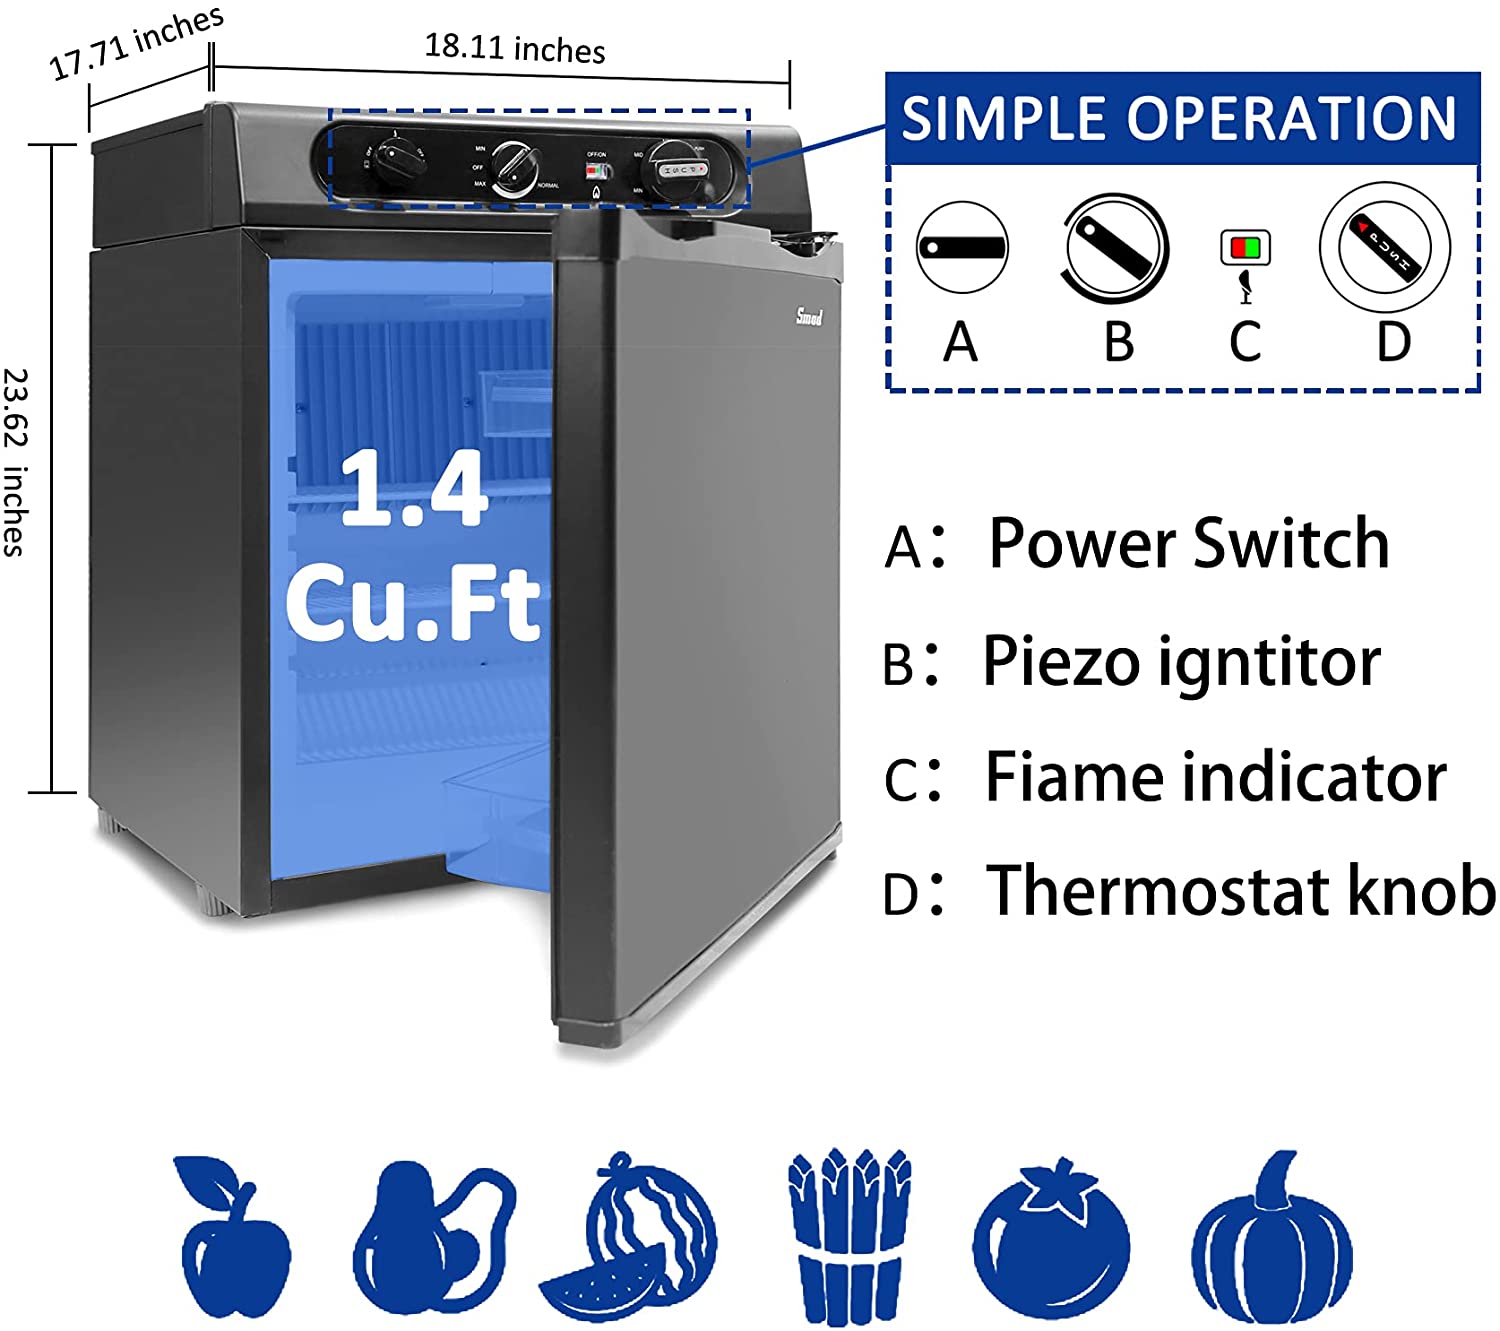  Smad Propane Refrigerator 1.4 Cu.Ft, 3 Way Mini Fridge, 12 V/110V/LPG Gas, Small Compact Refrigerator Specs